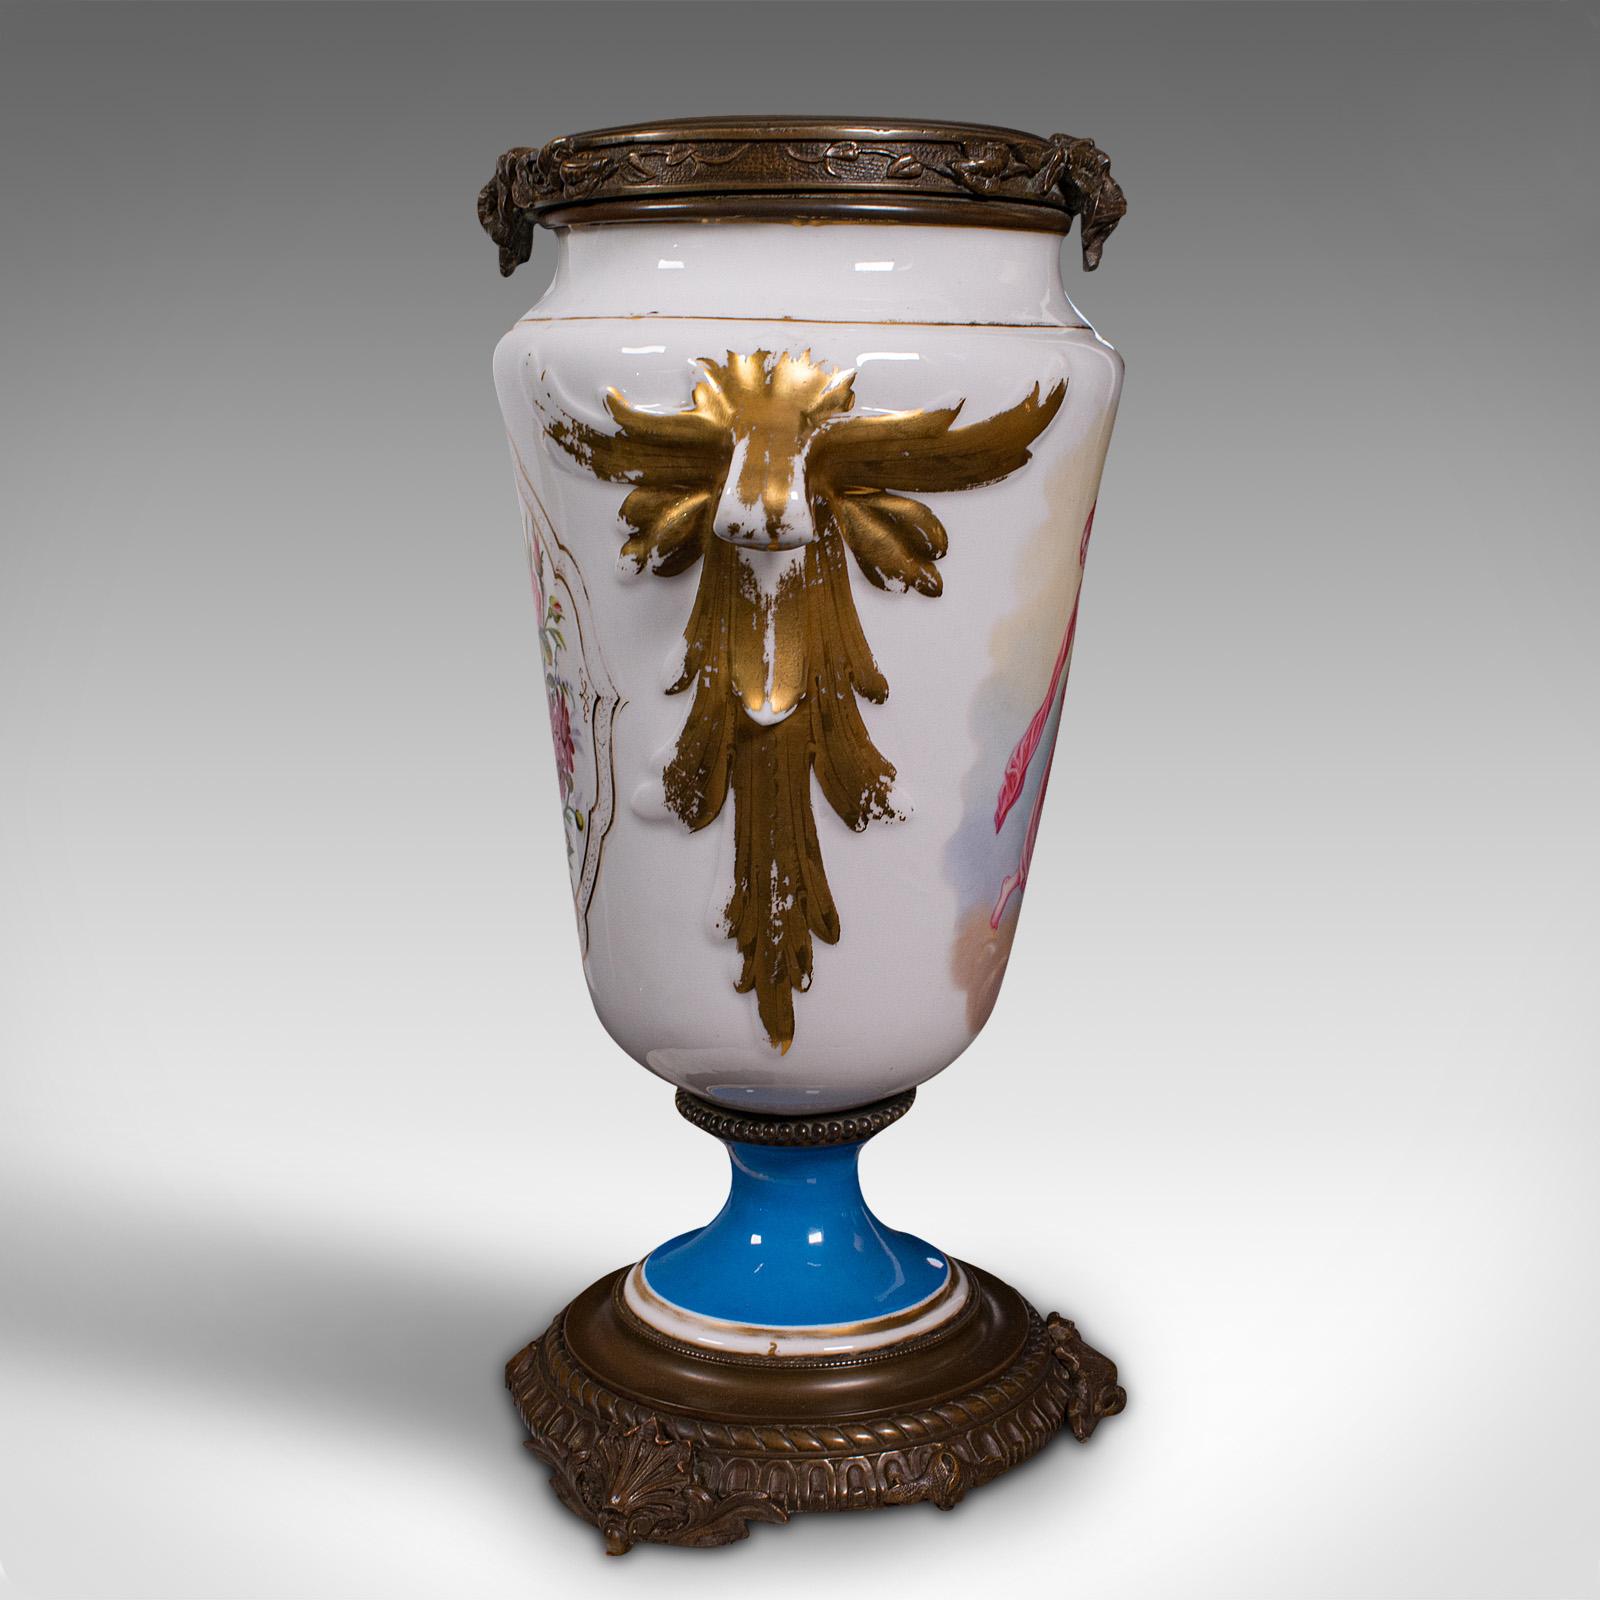 Antique Decorative Jardiniere, French, Ceramic, Display Planter, Vase, Victorian For Sale 1